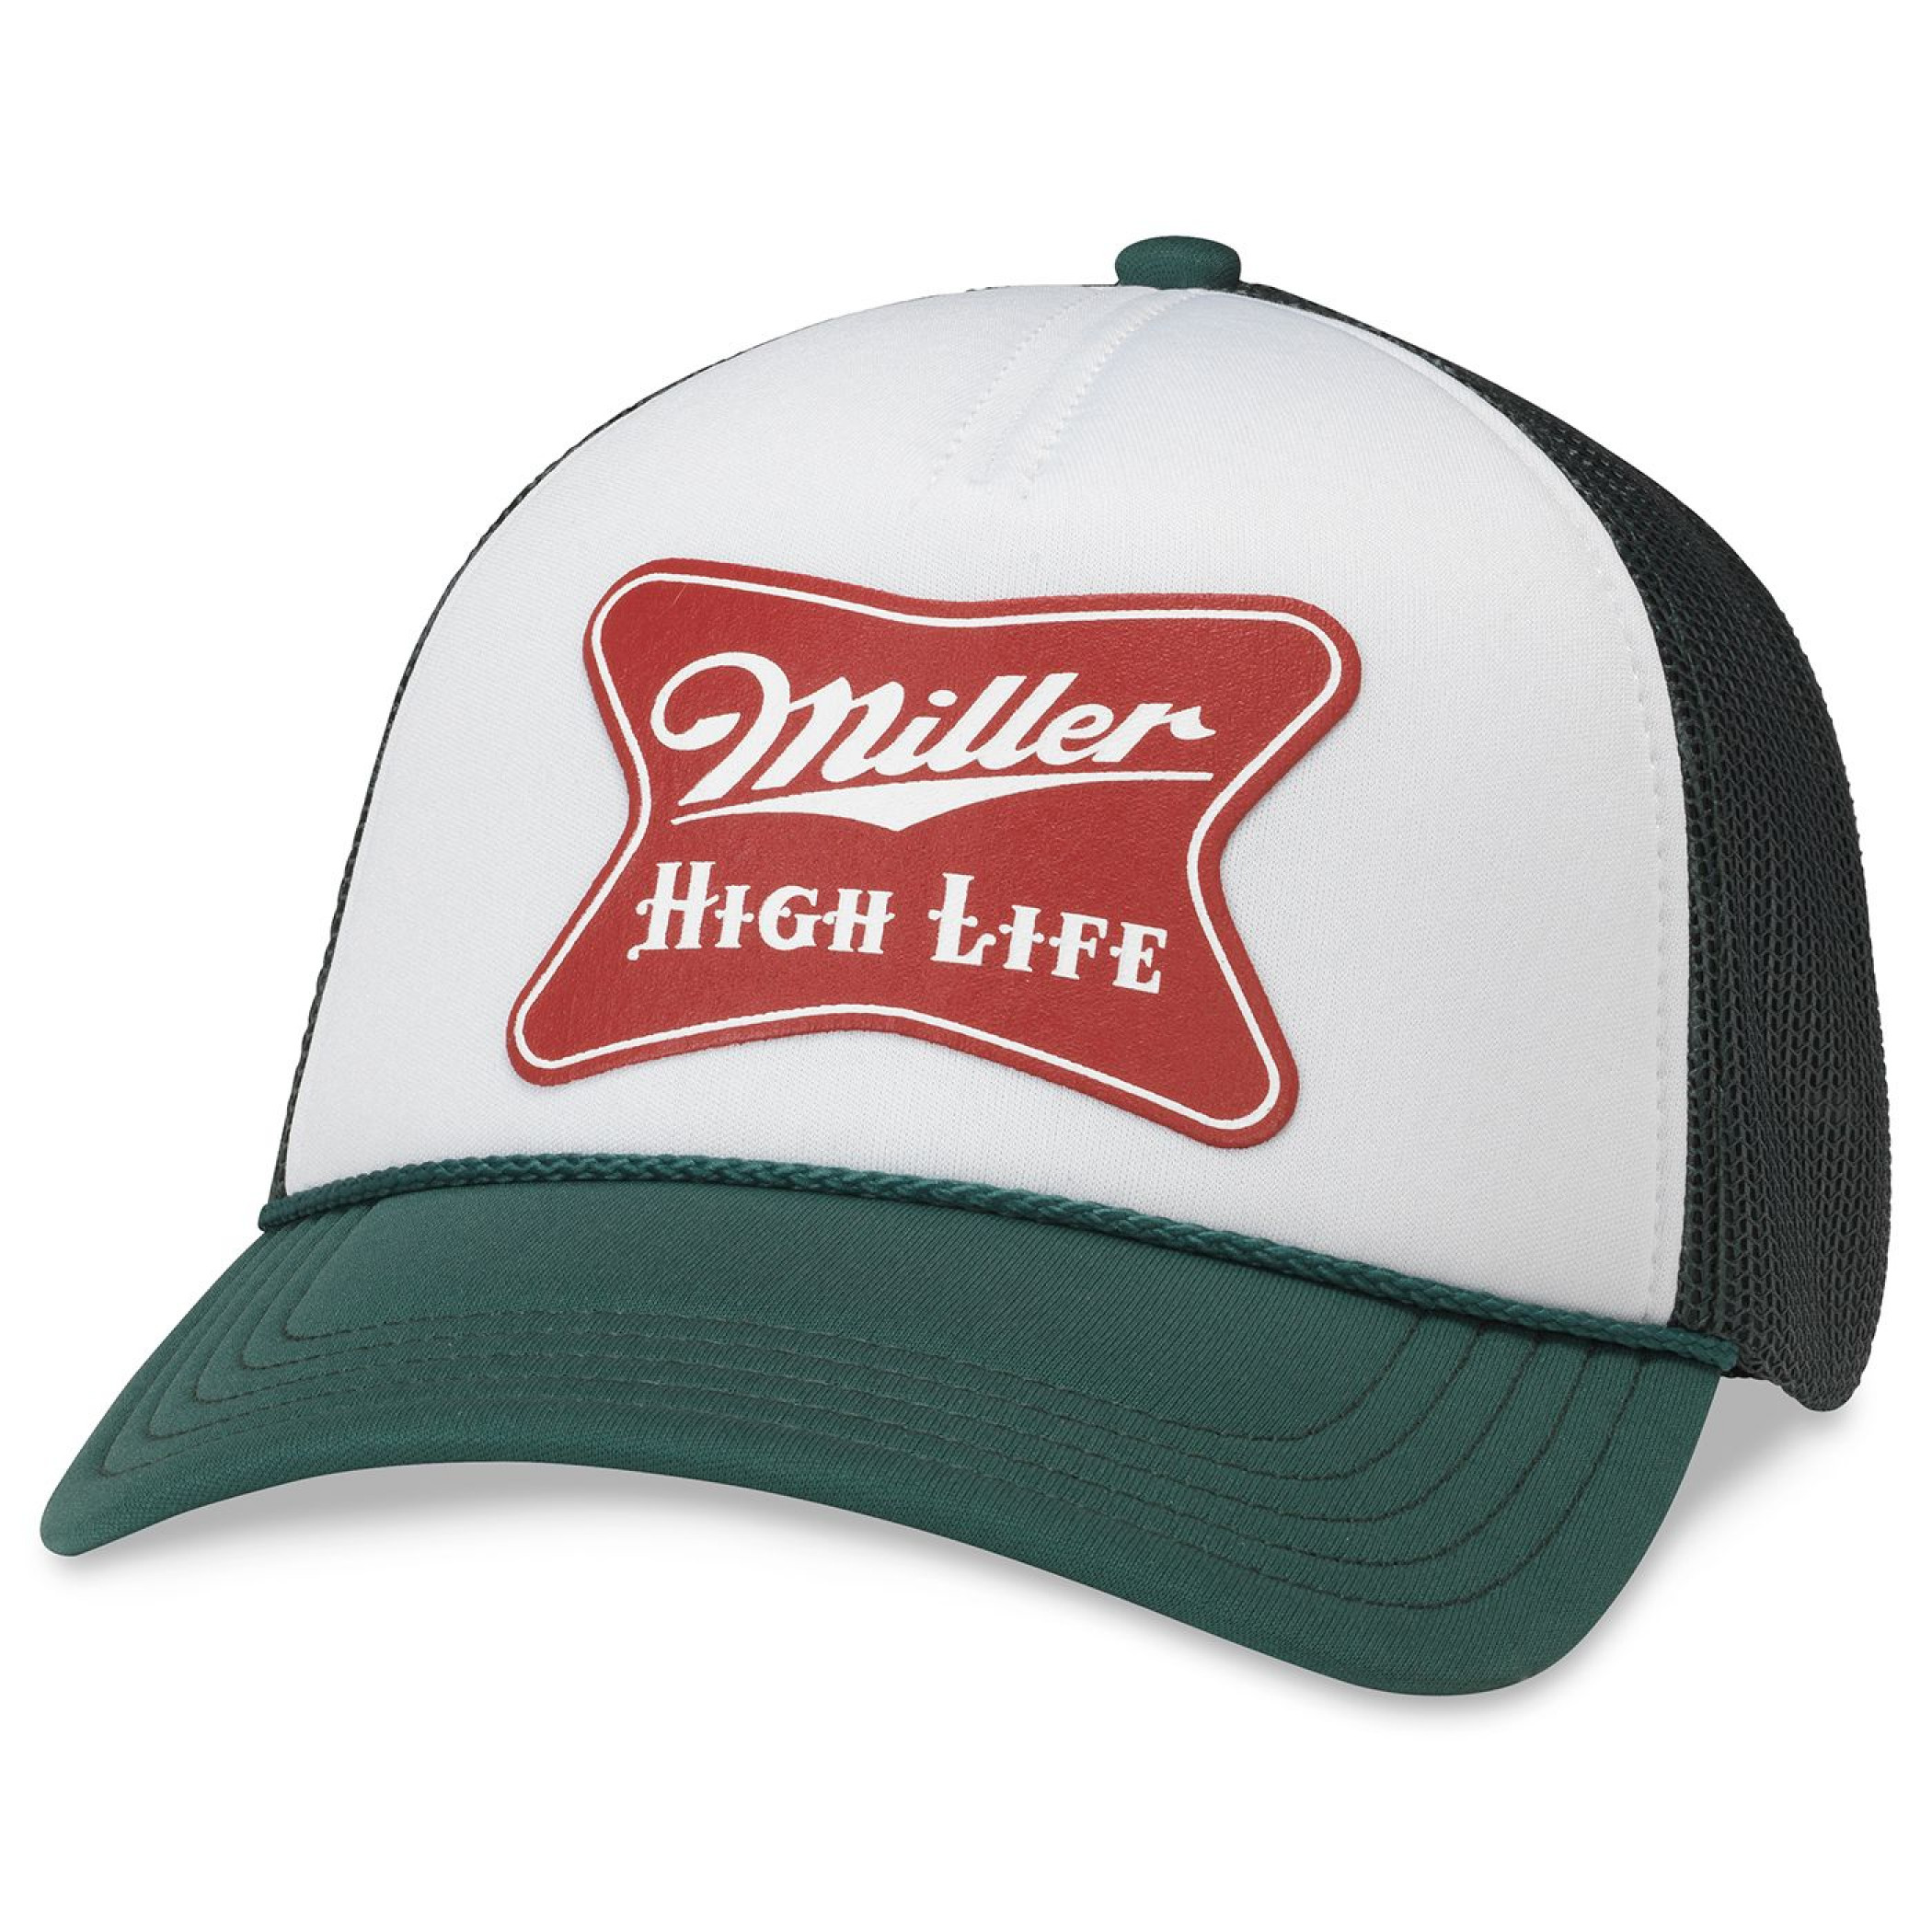 Miller High Life Logo Foamy Valin Snapback Hat